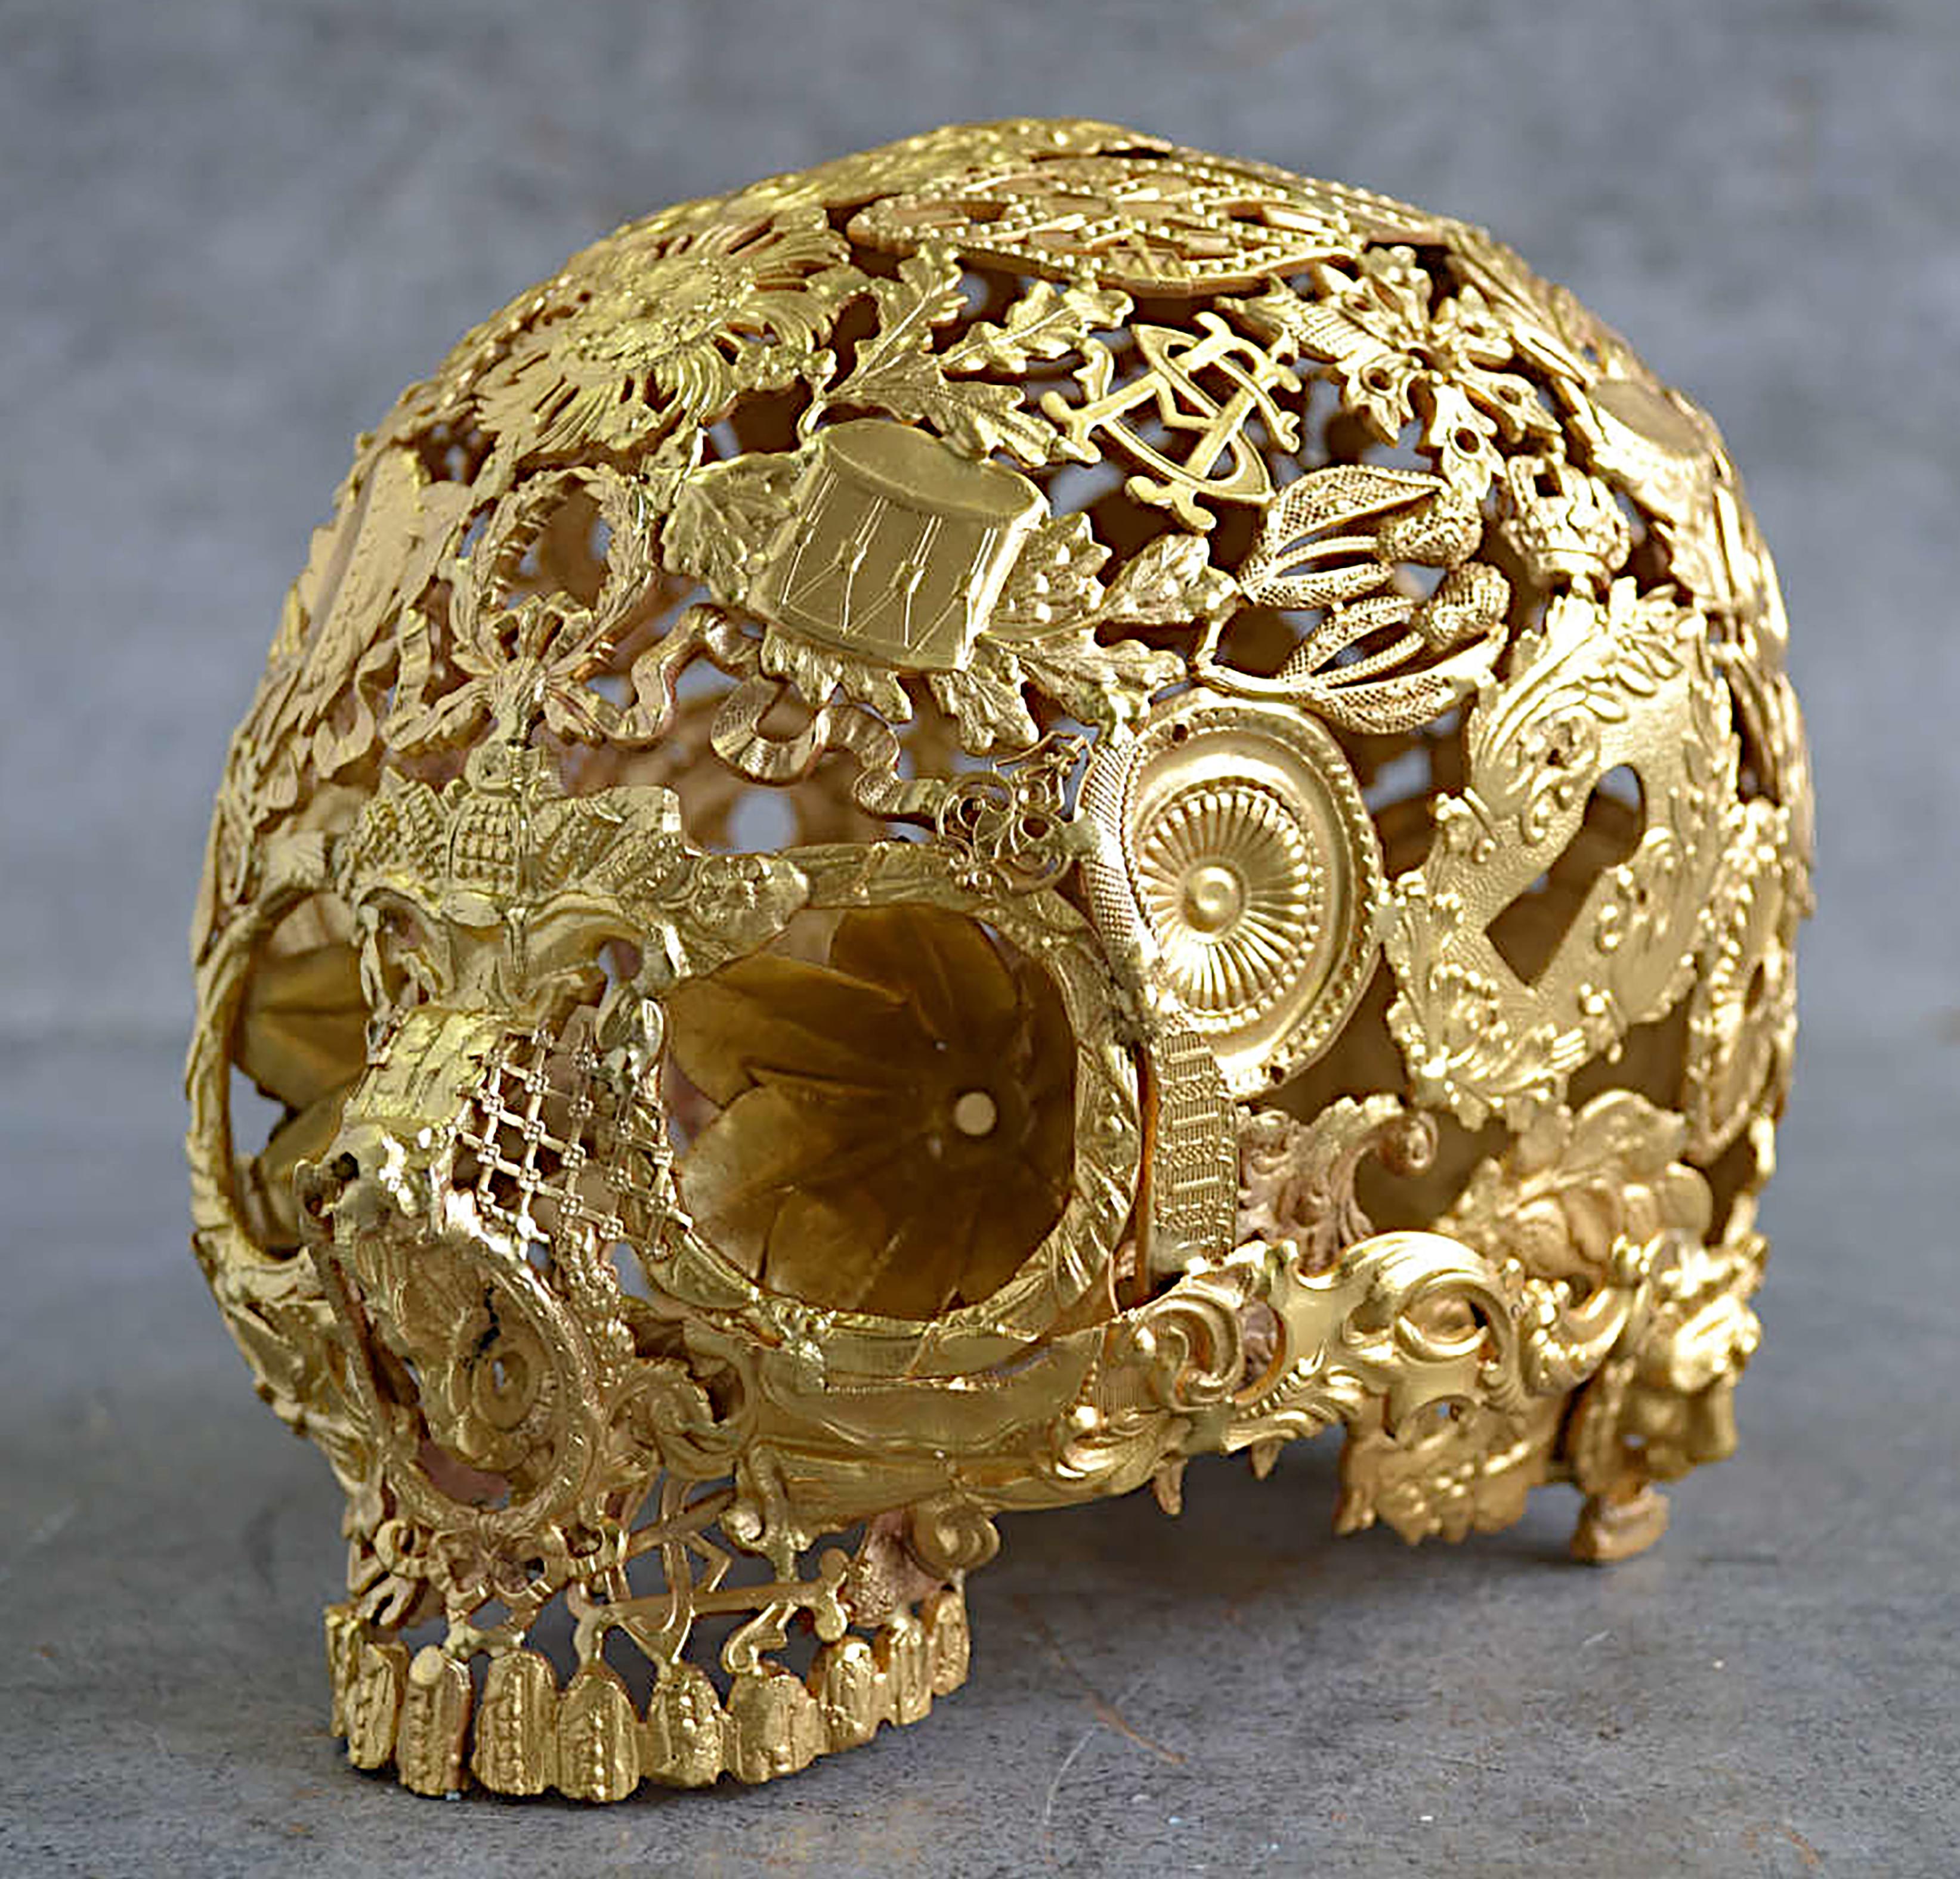 Alain BELLINO Figurative Sculpture - Gilded Boy - Skull Bronze Sculpture - Unique Piece